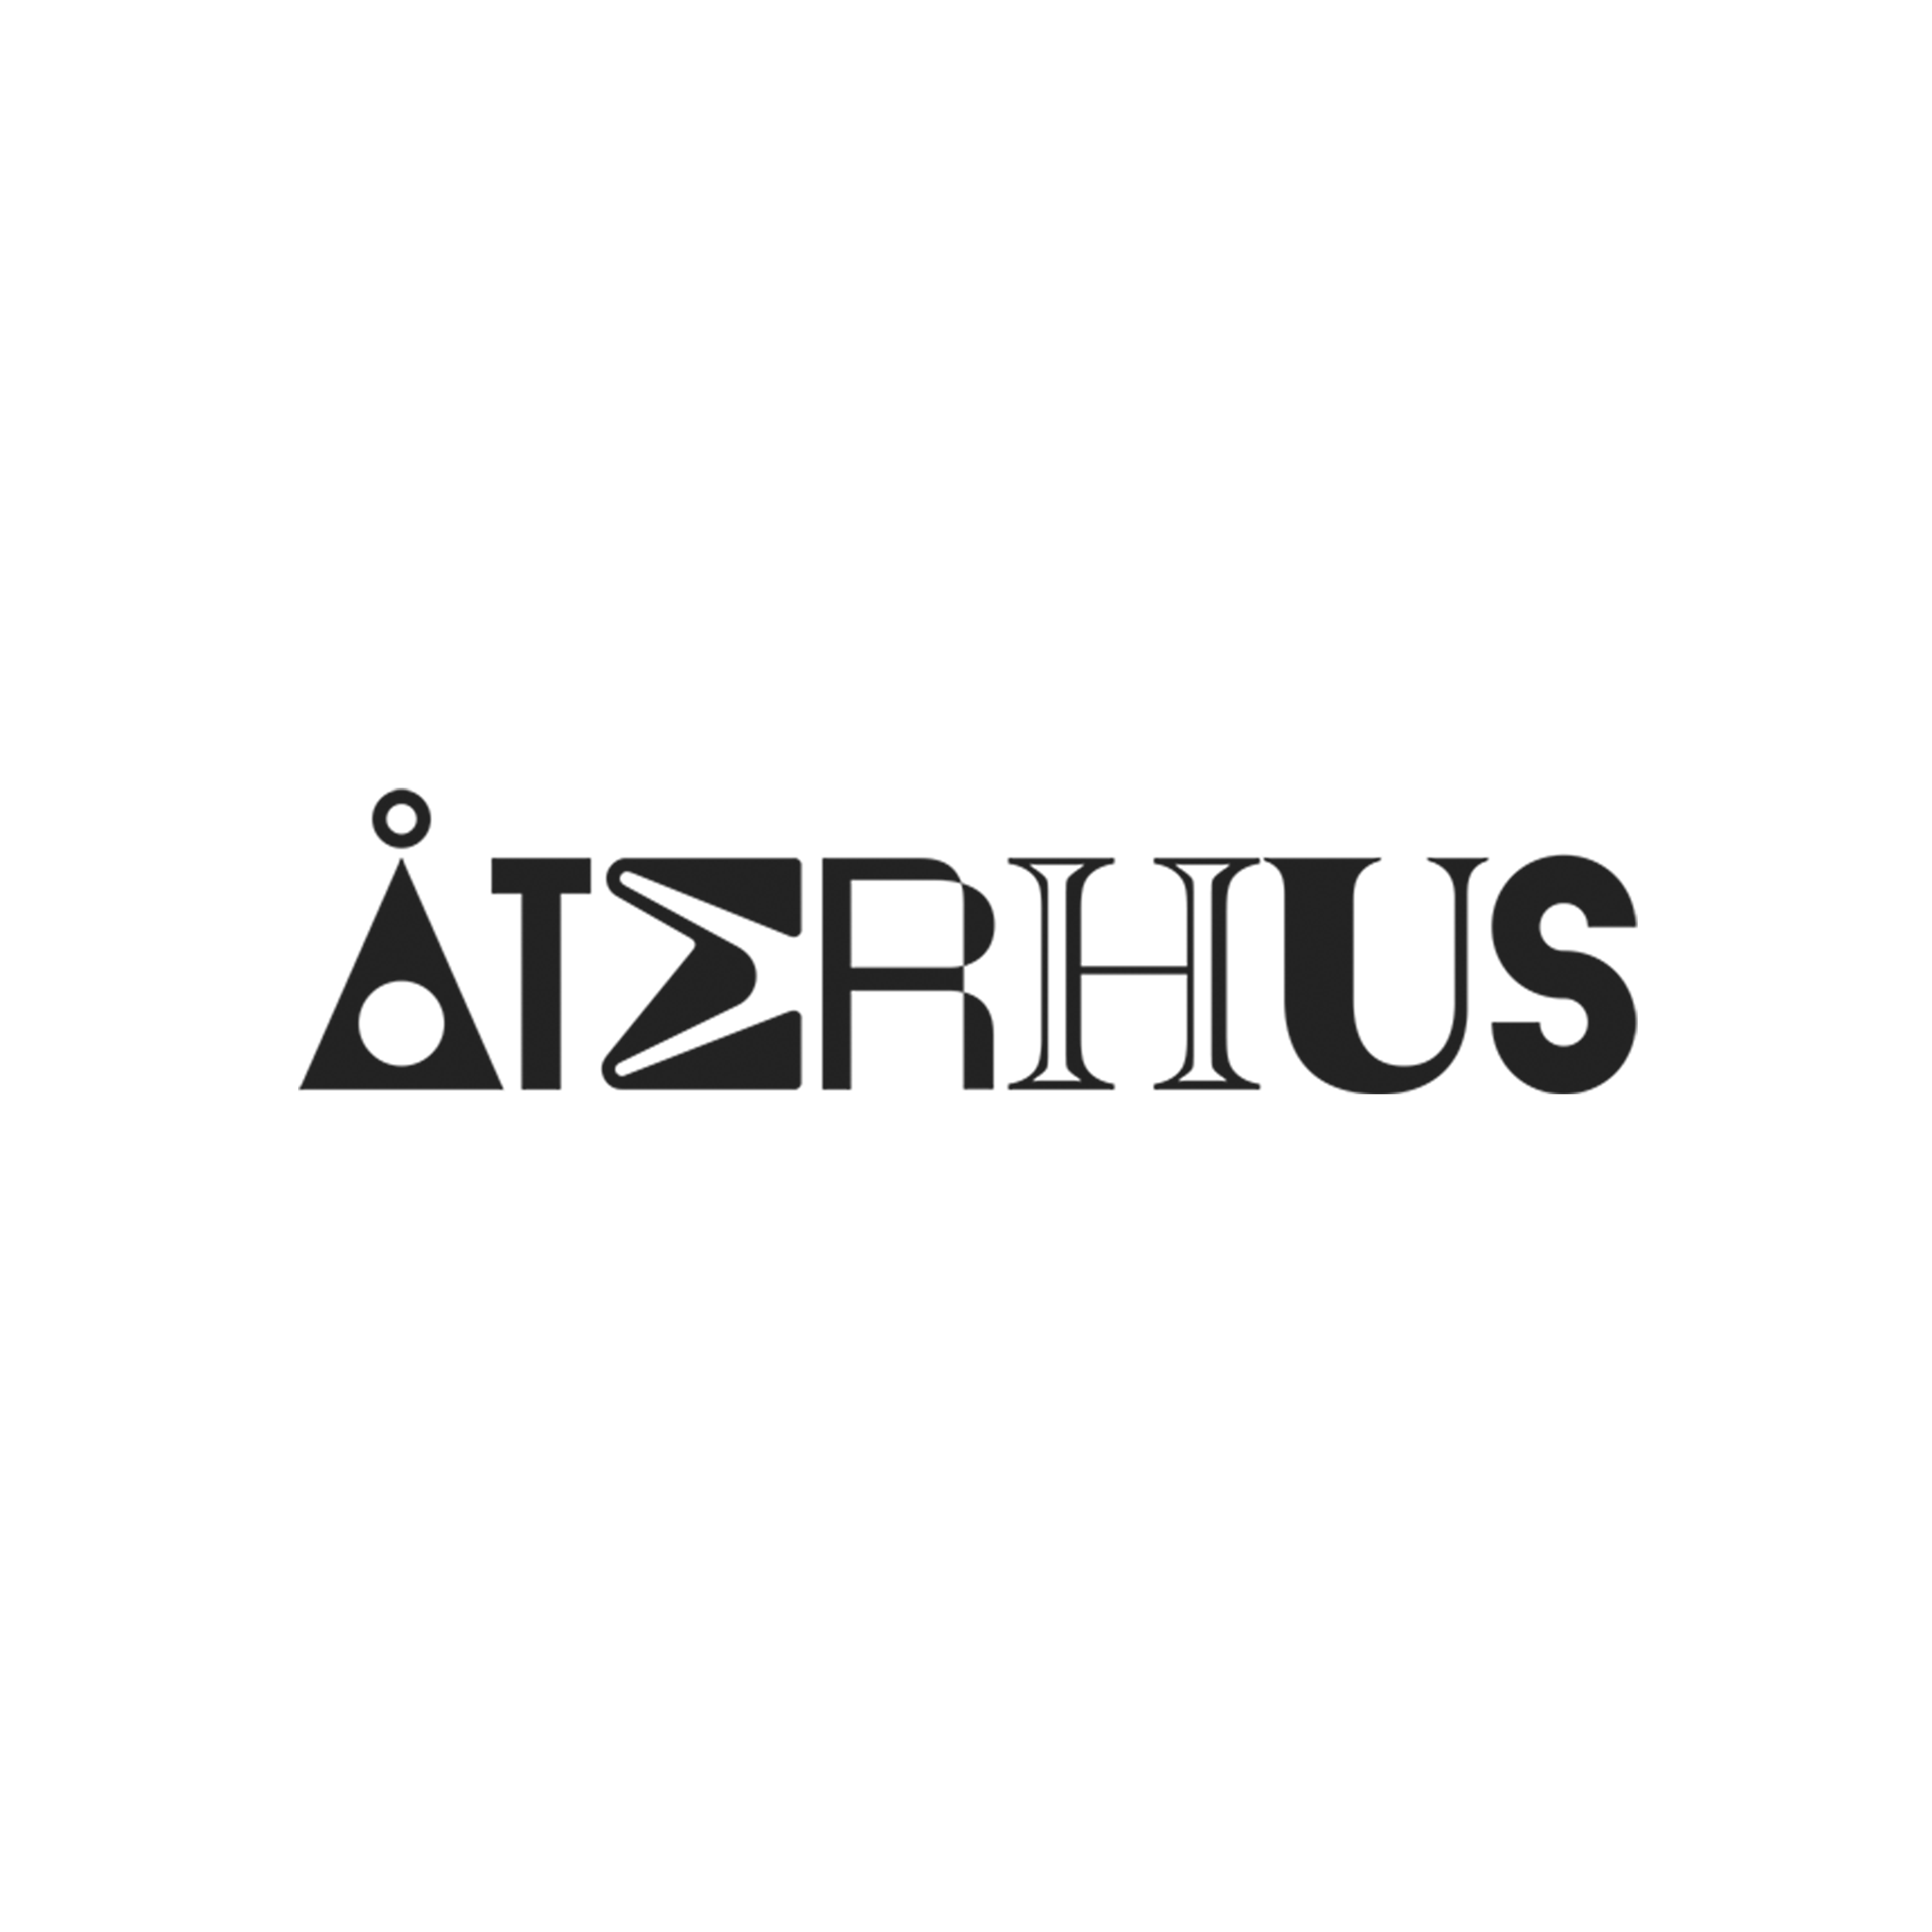 Återhus logo in black